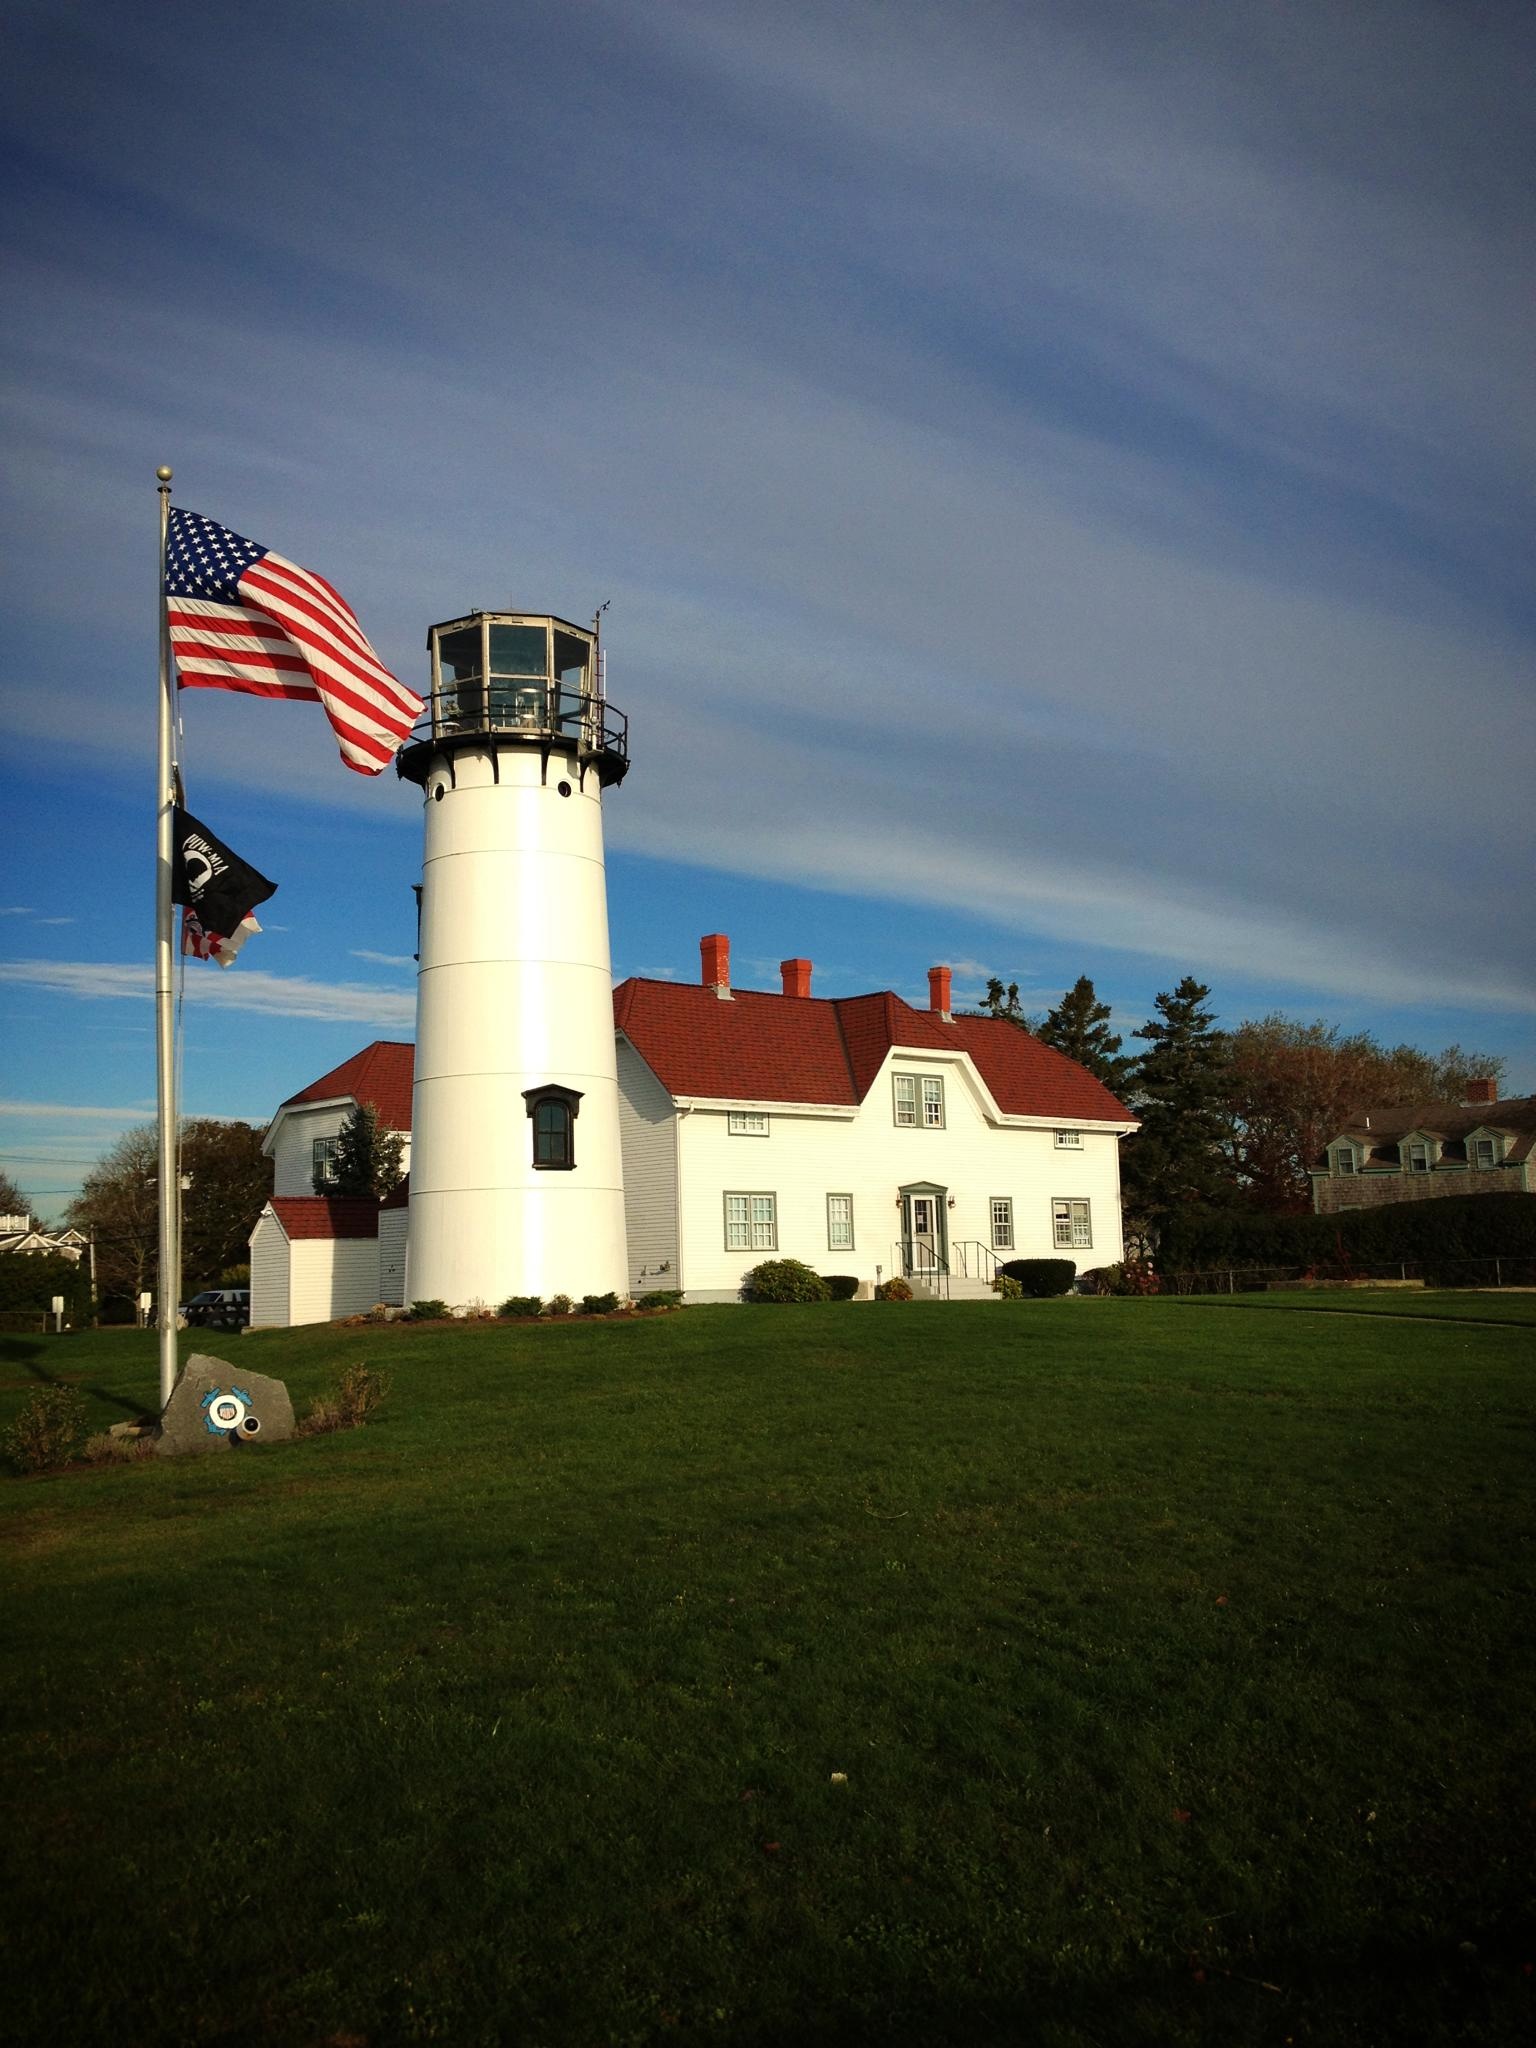 an american flag flies near a lighthouse